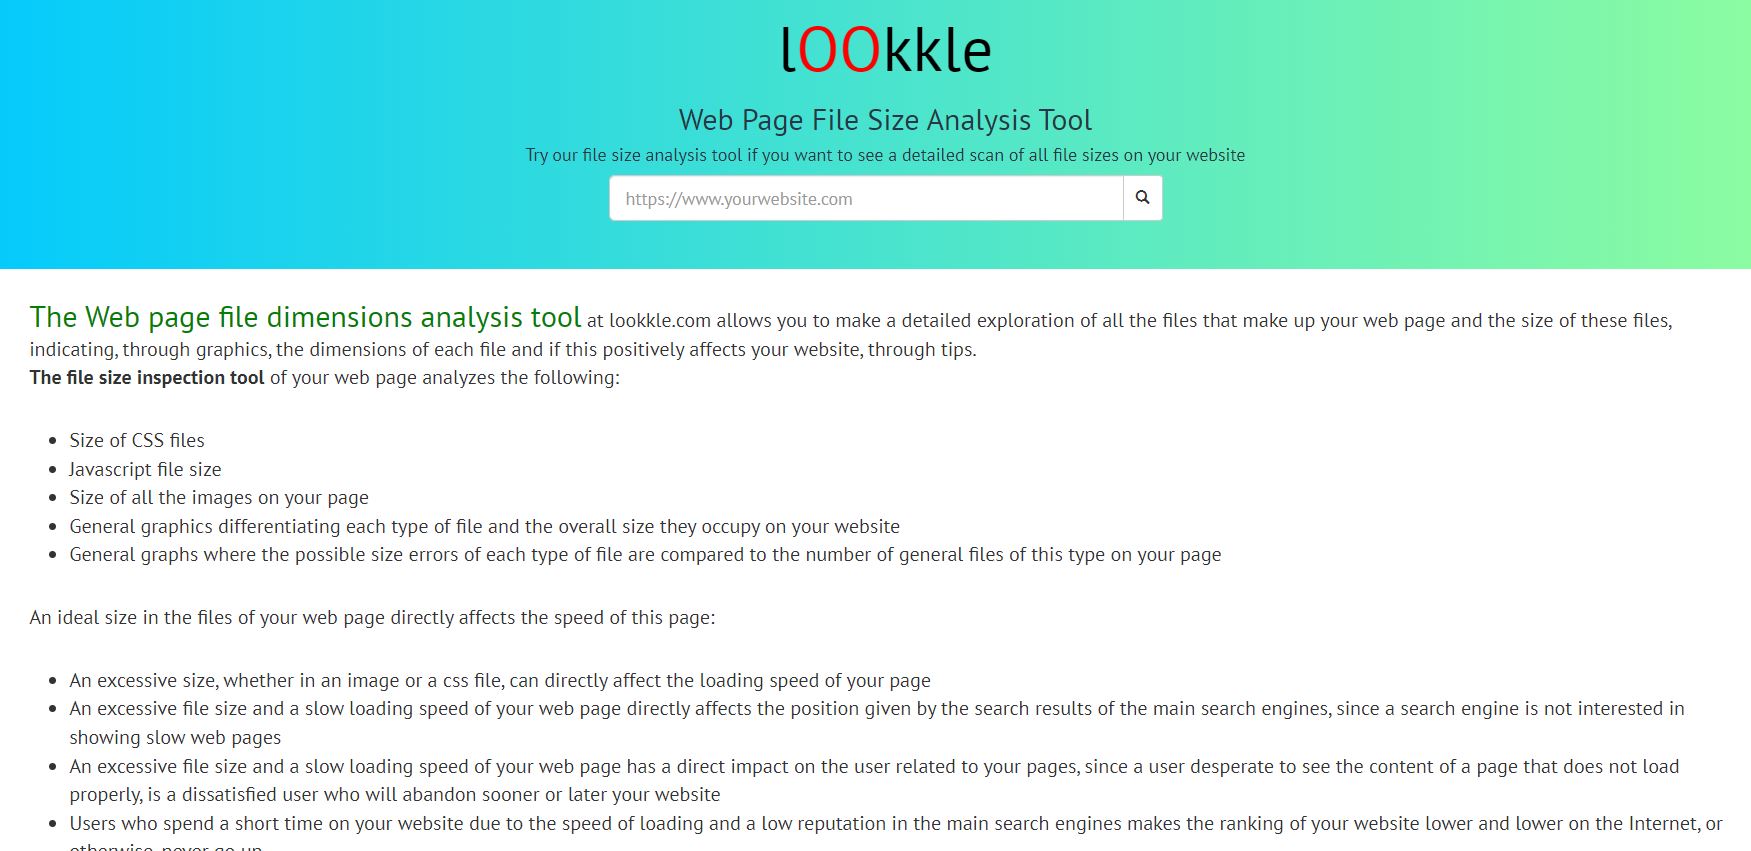 lookkle.com's file size analyzer